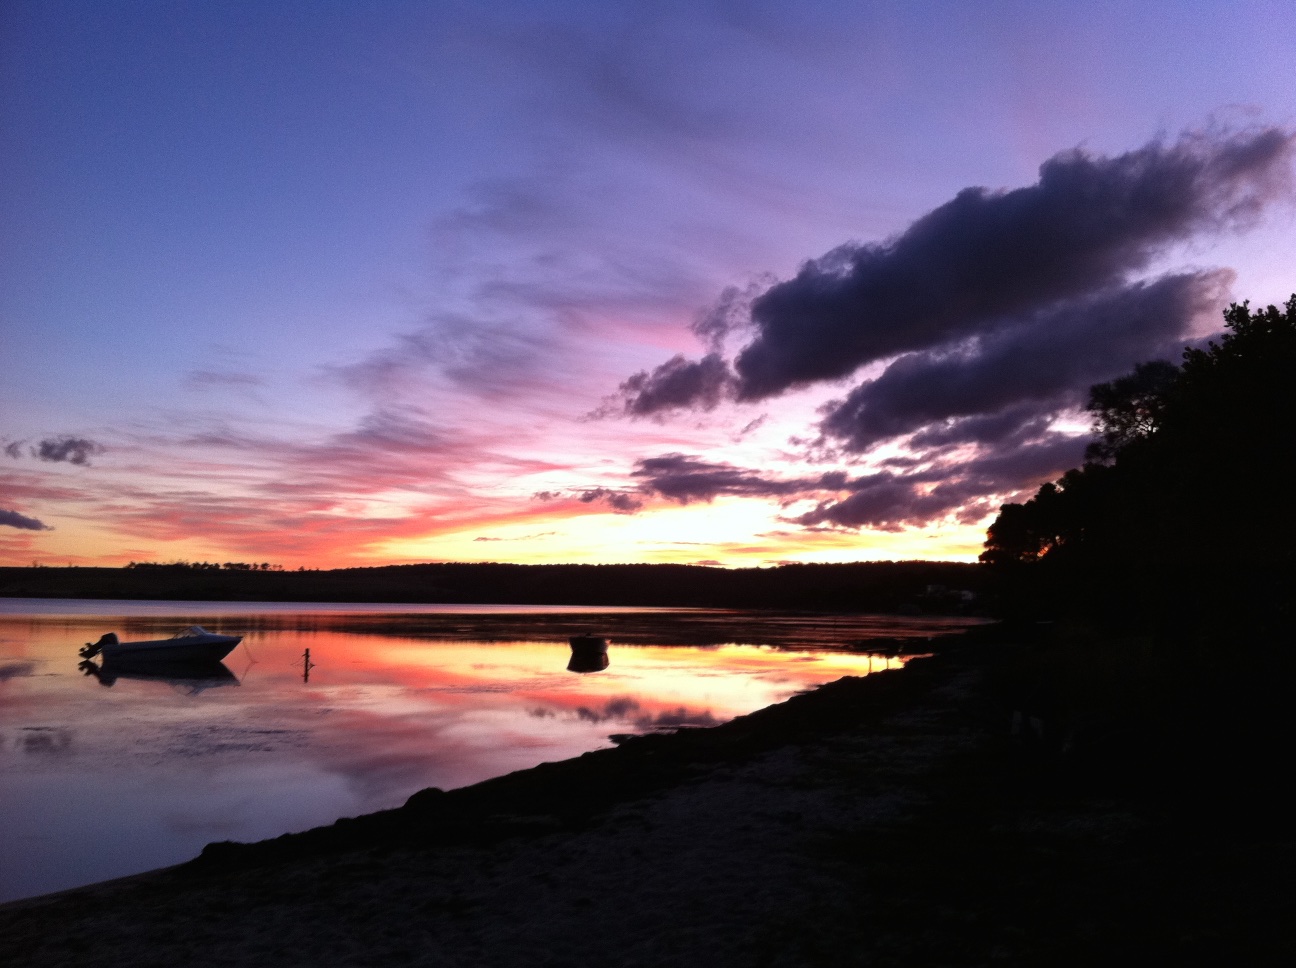 Sunset at Anson's Bay